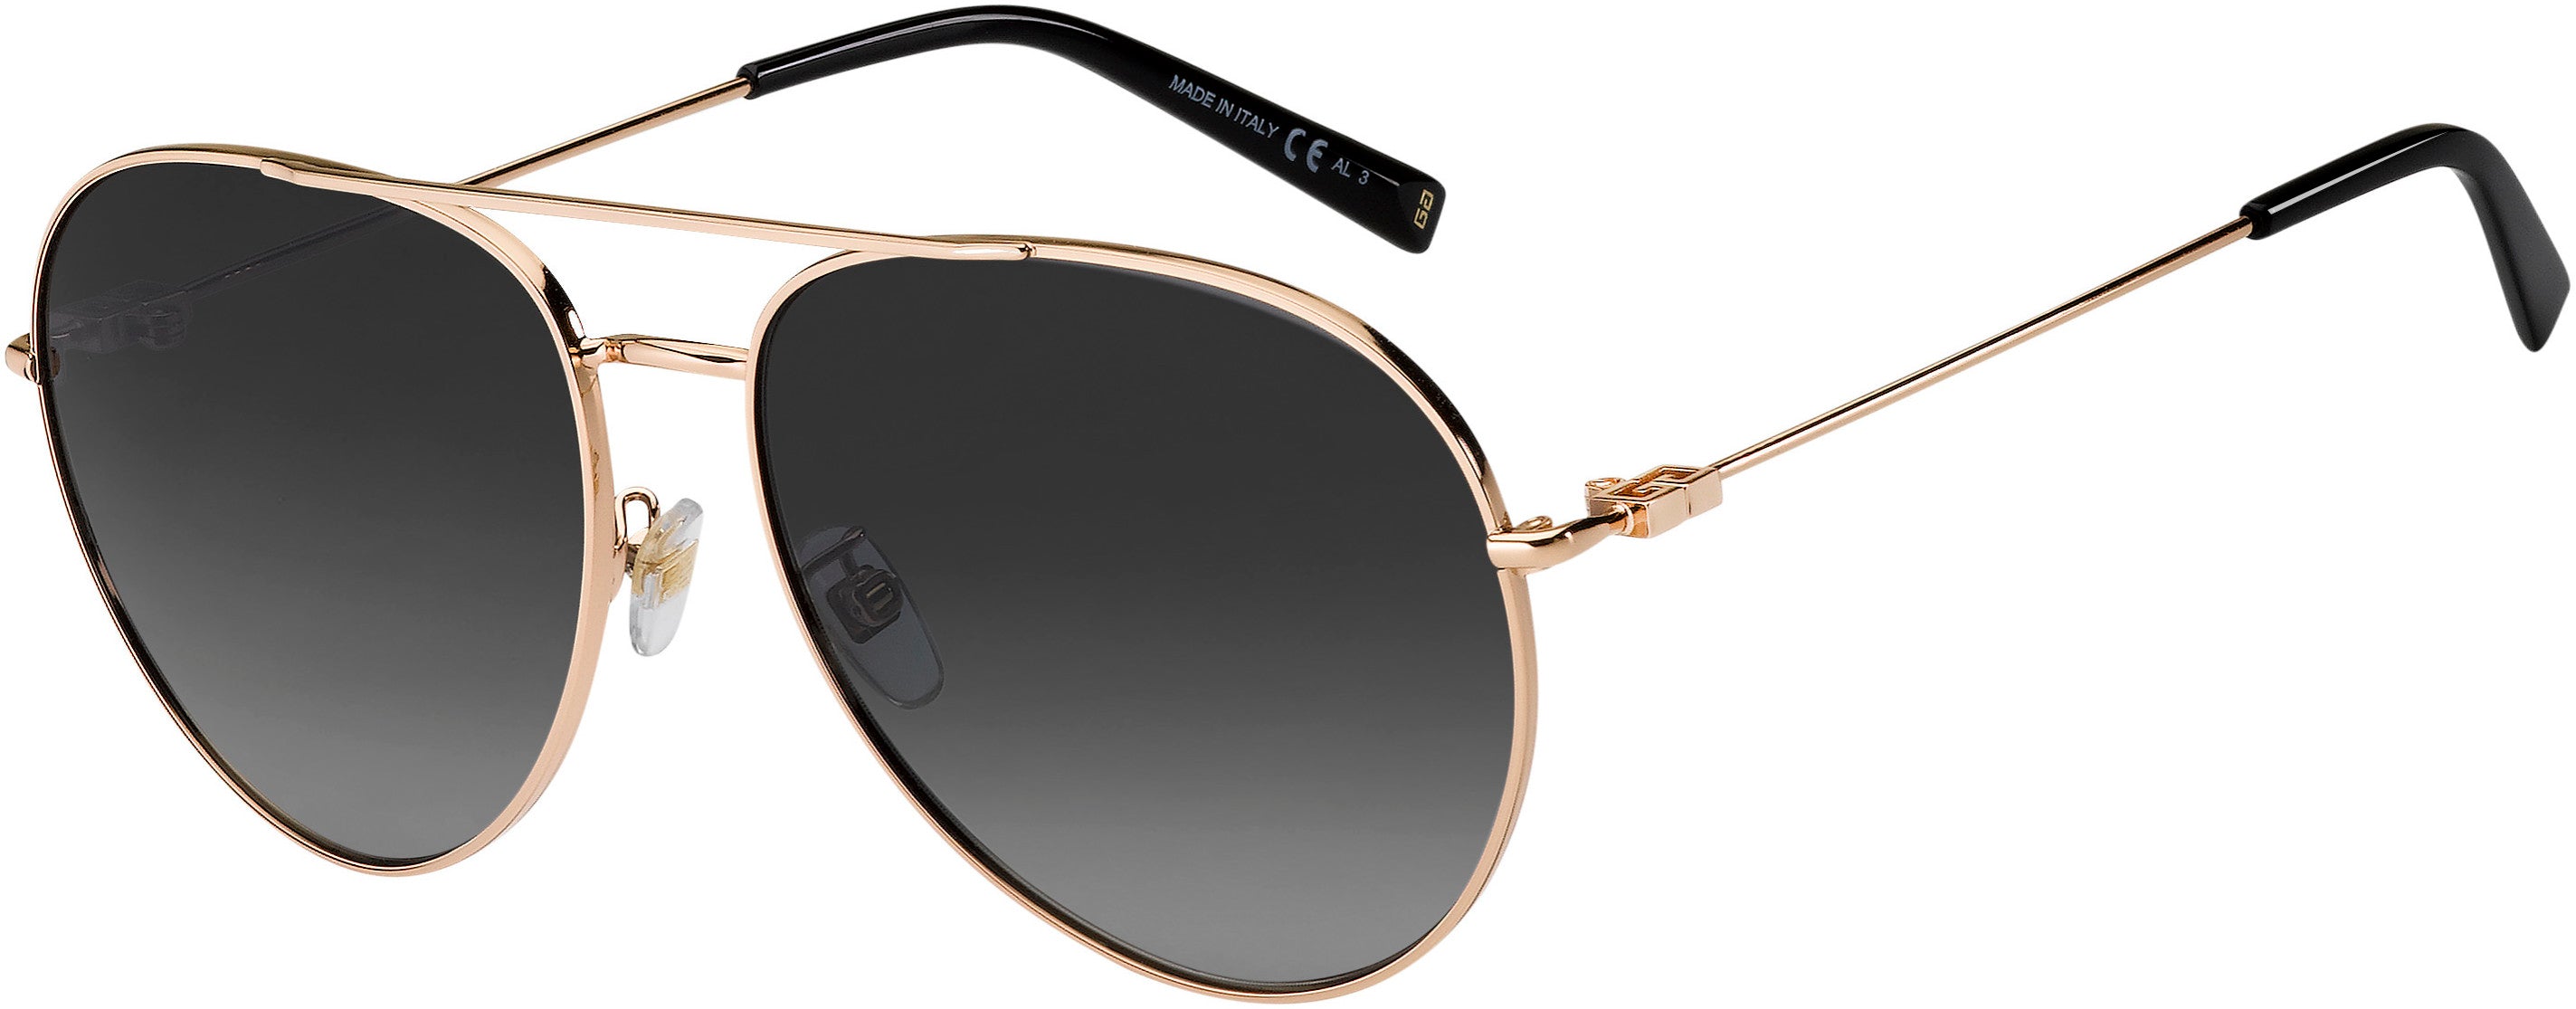  Givenchy 7196/G/S Aviator Sunglasses 0DDB-0DDB  Gold Copper (9O Dark Gray Gradient)